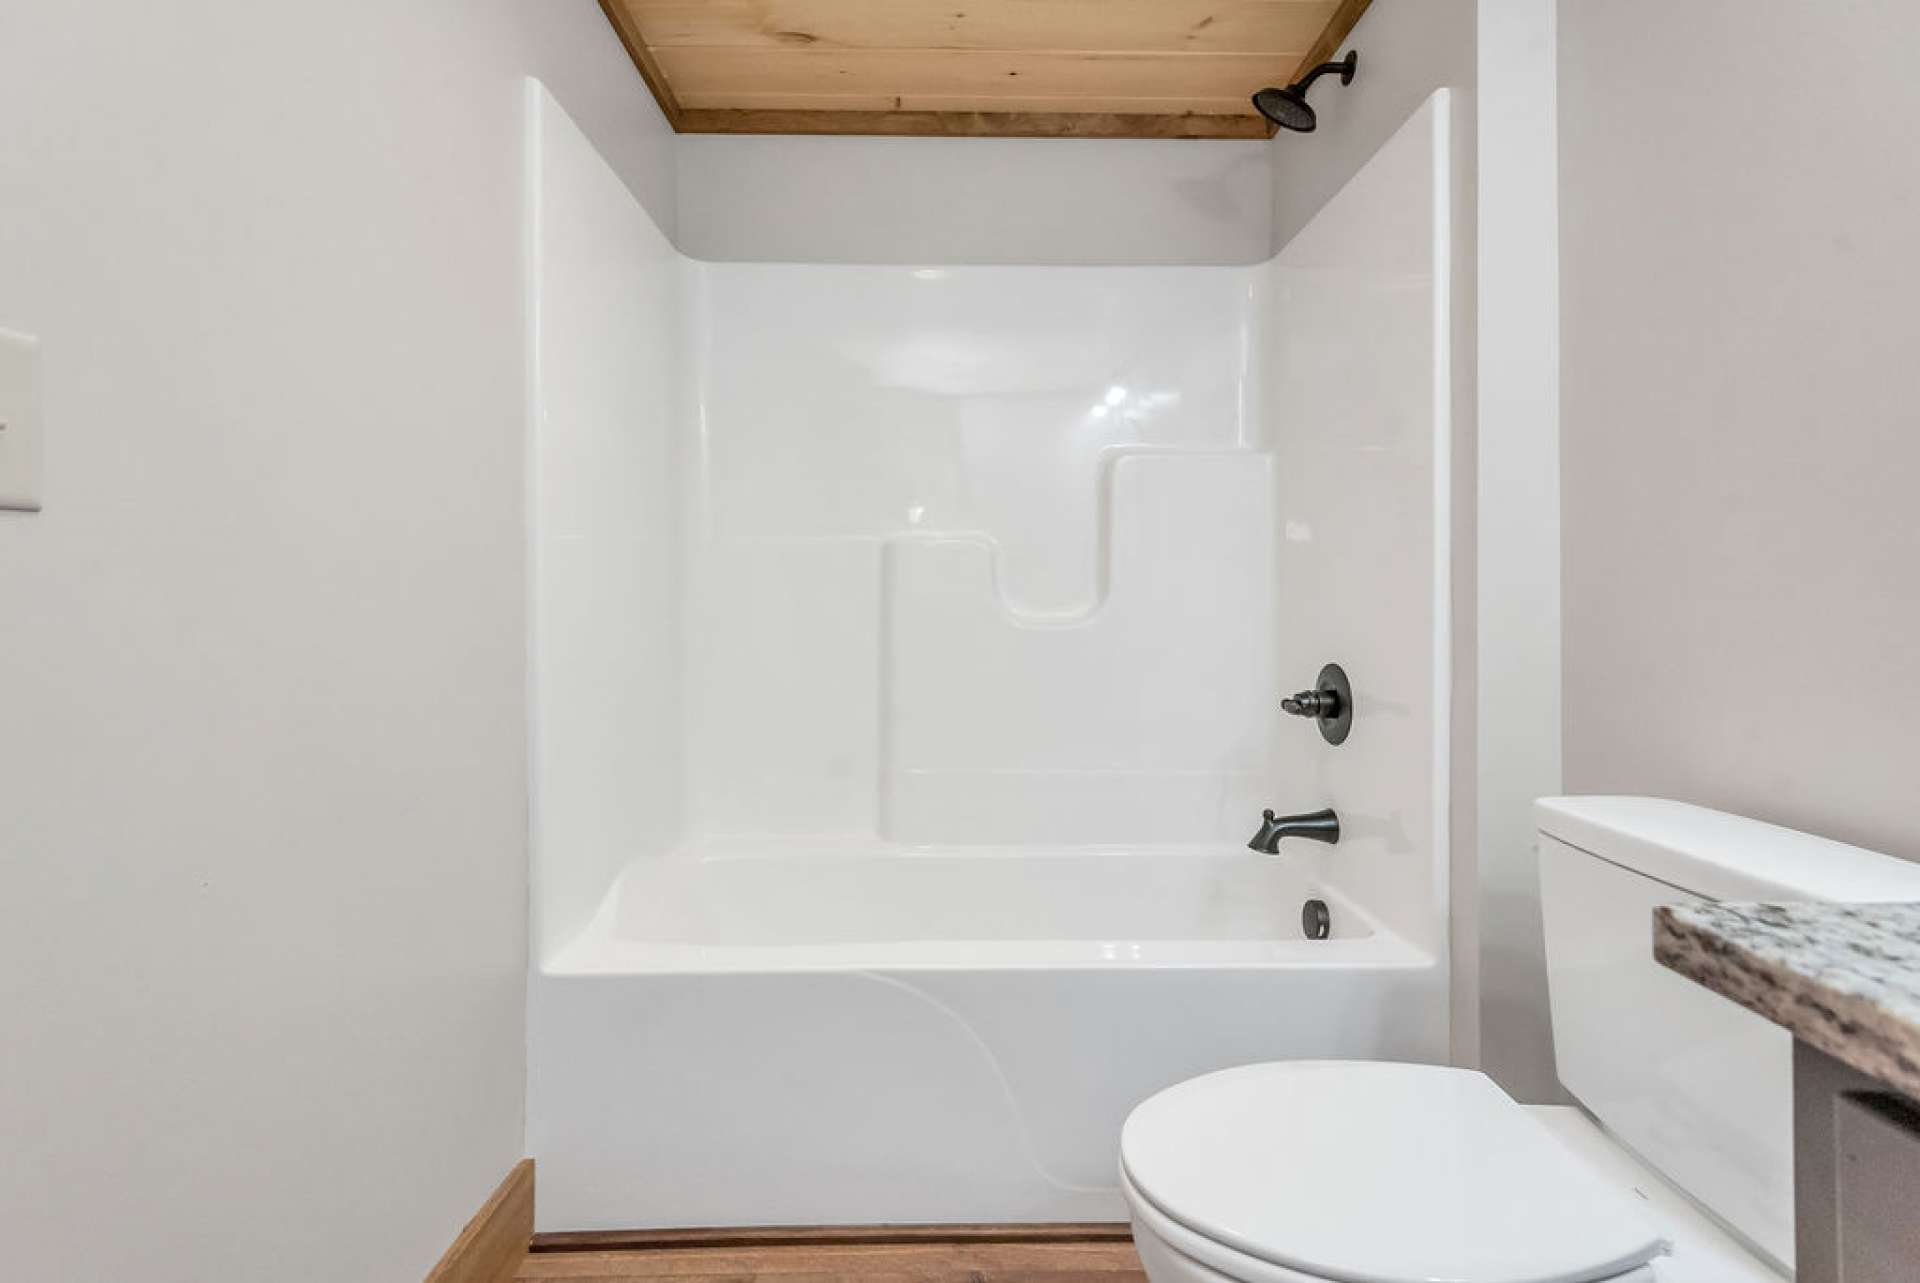 Upper level bath includes fiberglass tub/shower and...